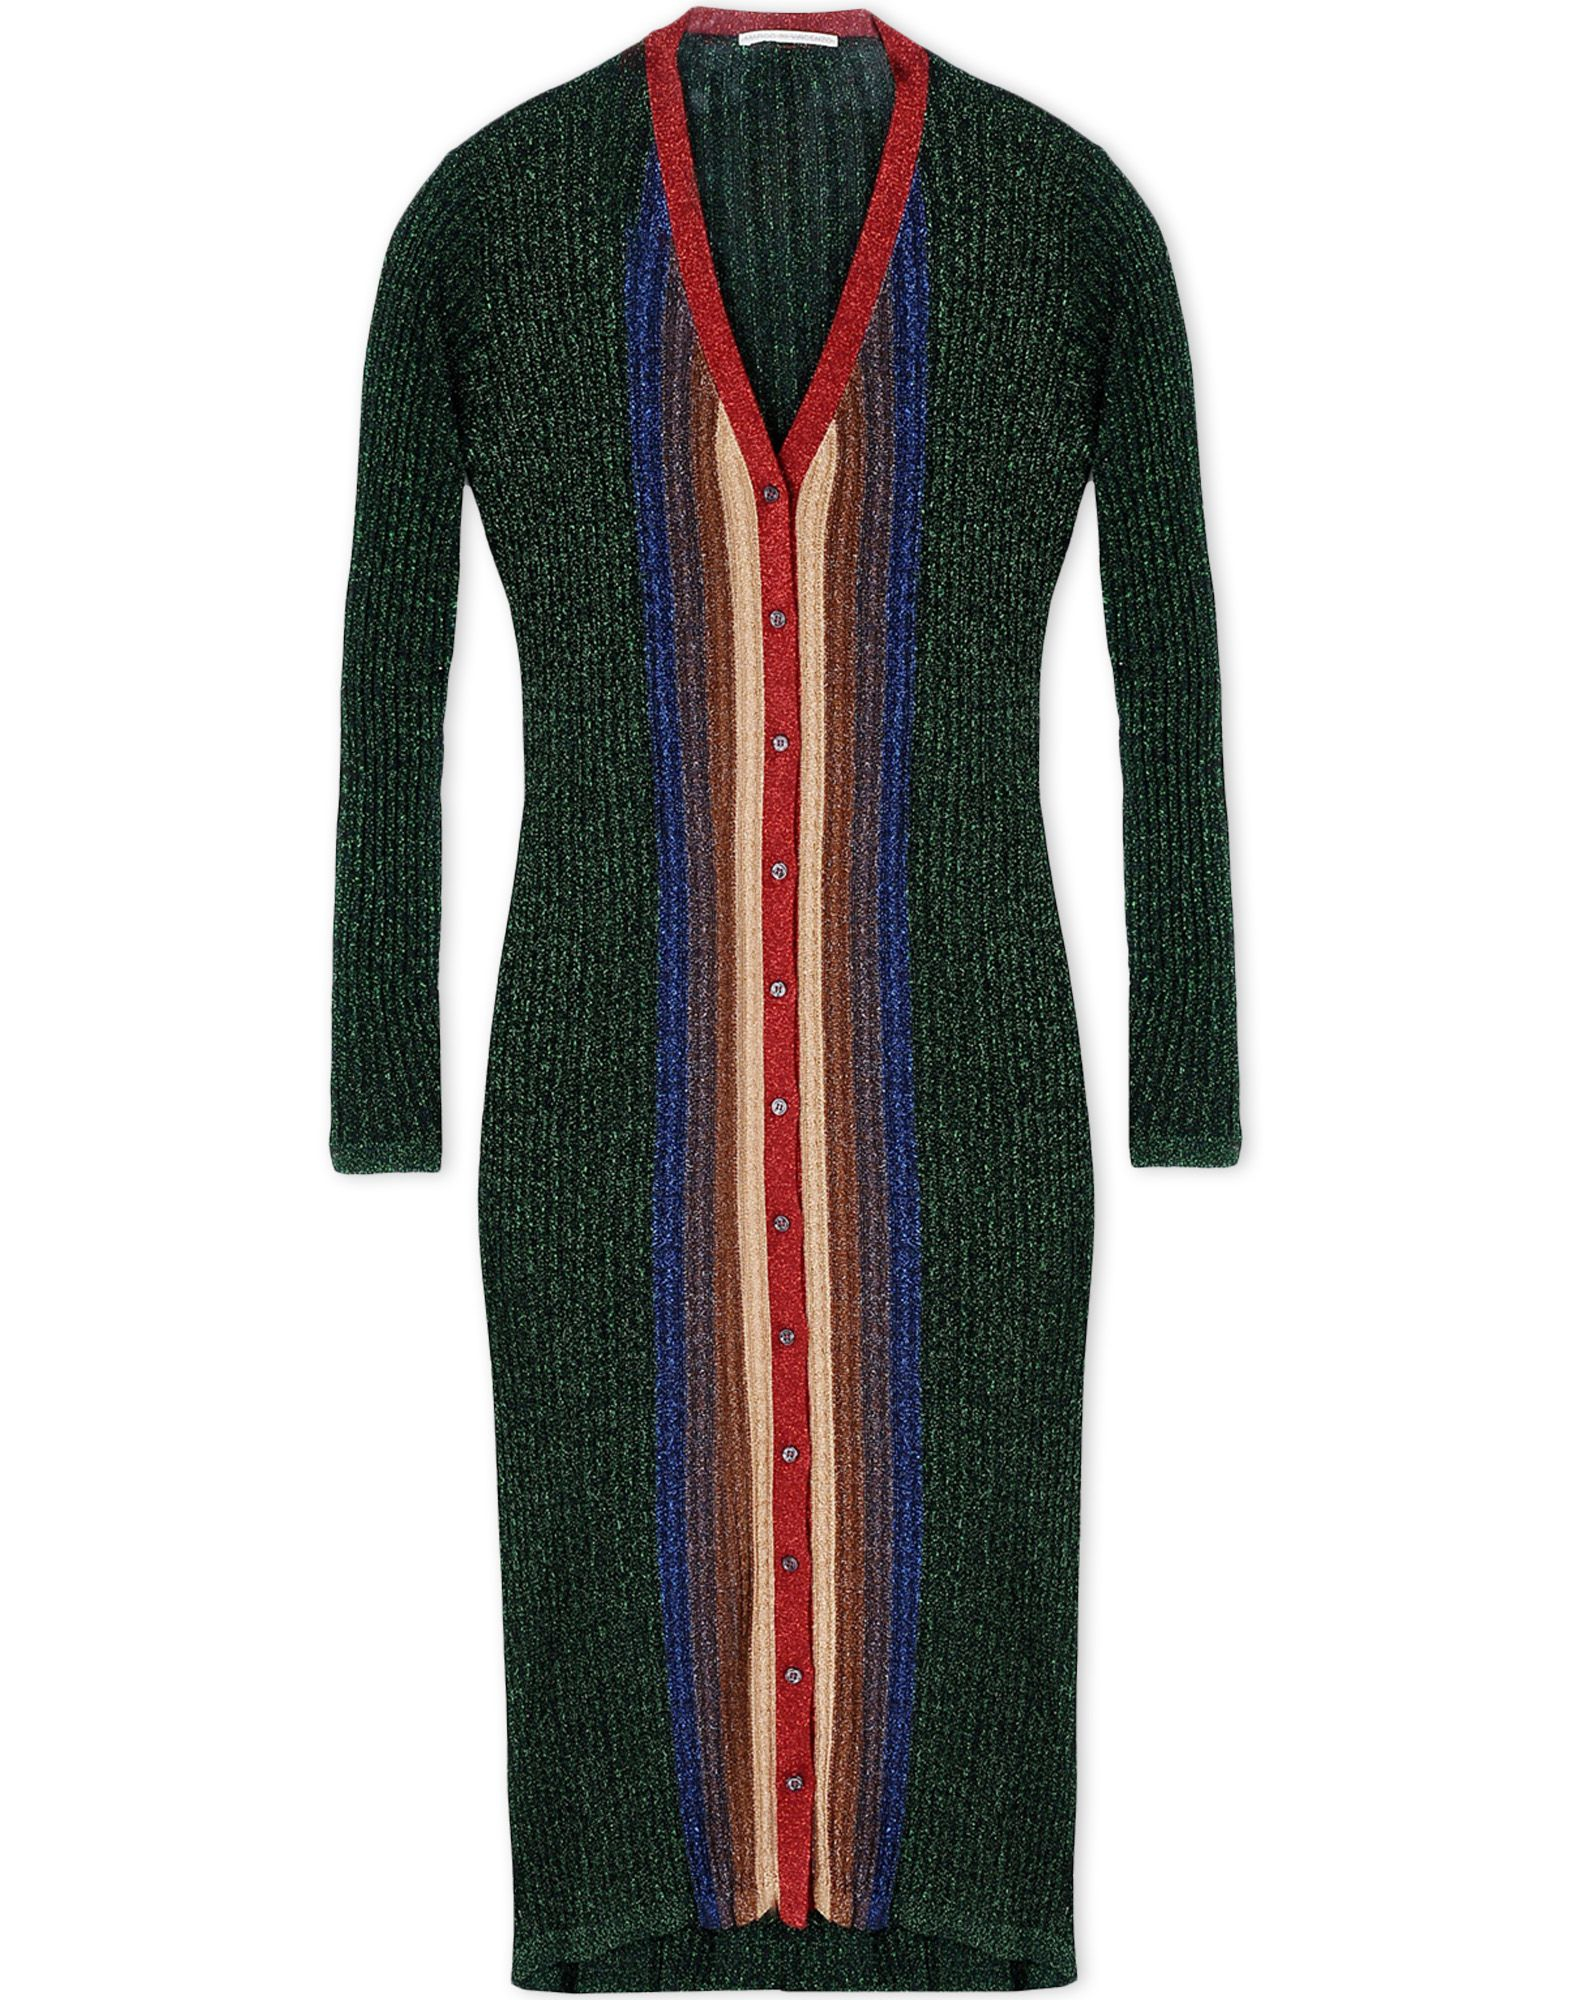 Marco de vincenzo 3/4 Length Dress in Multicolor (Green) | Lyst